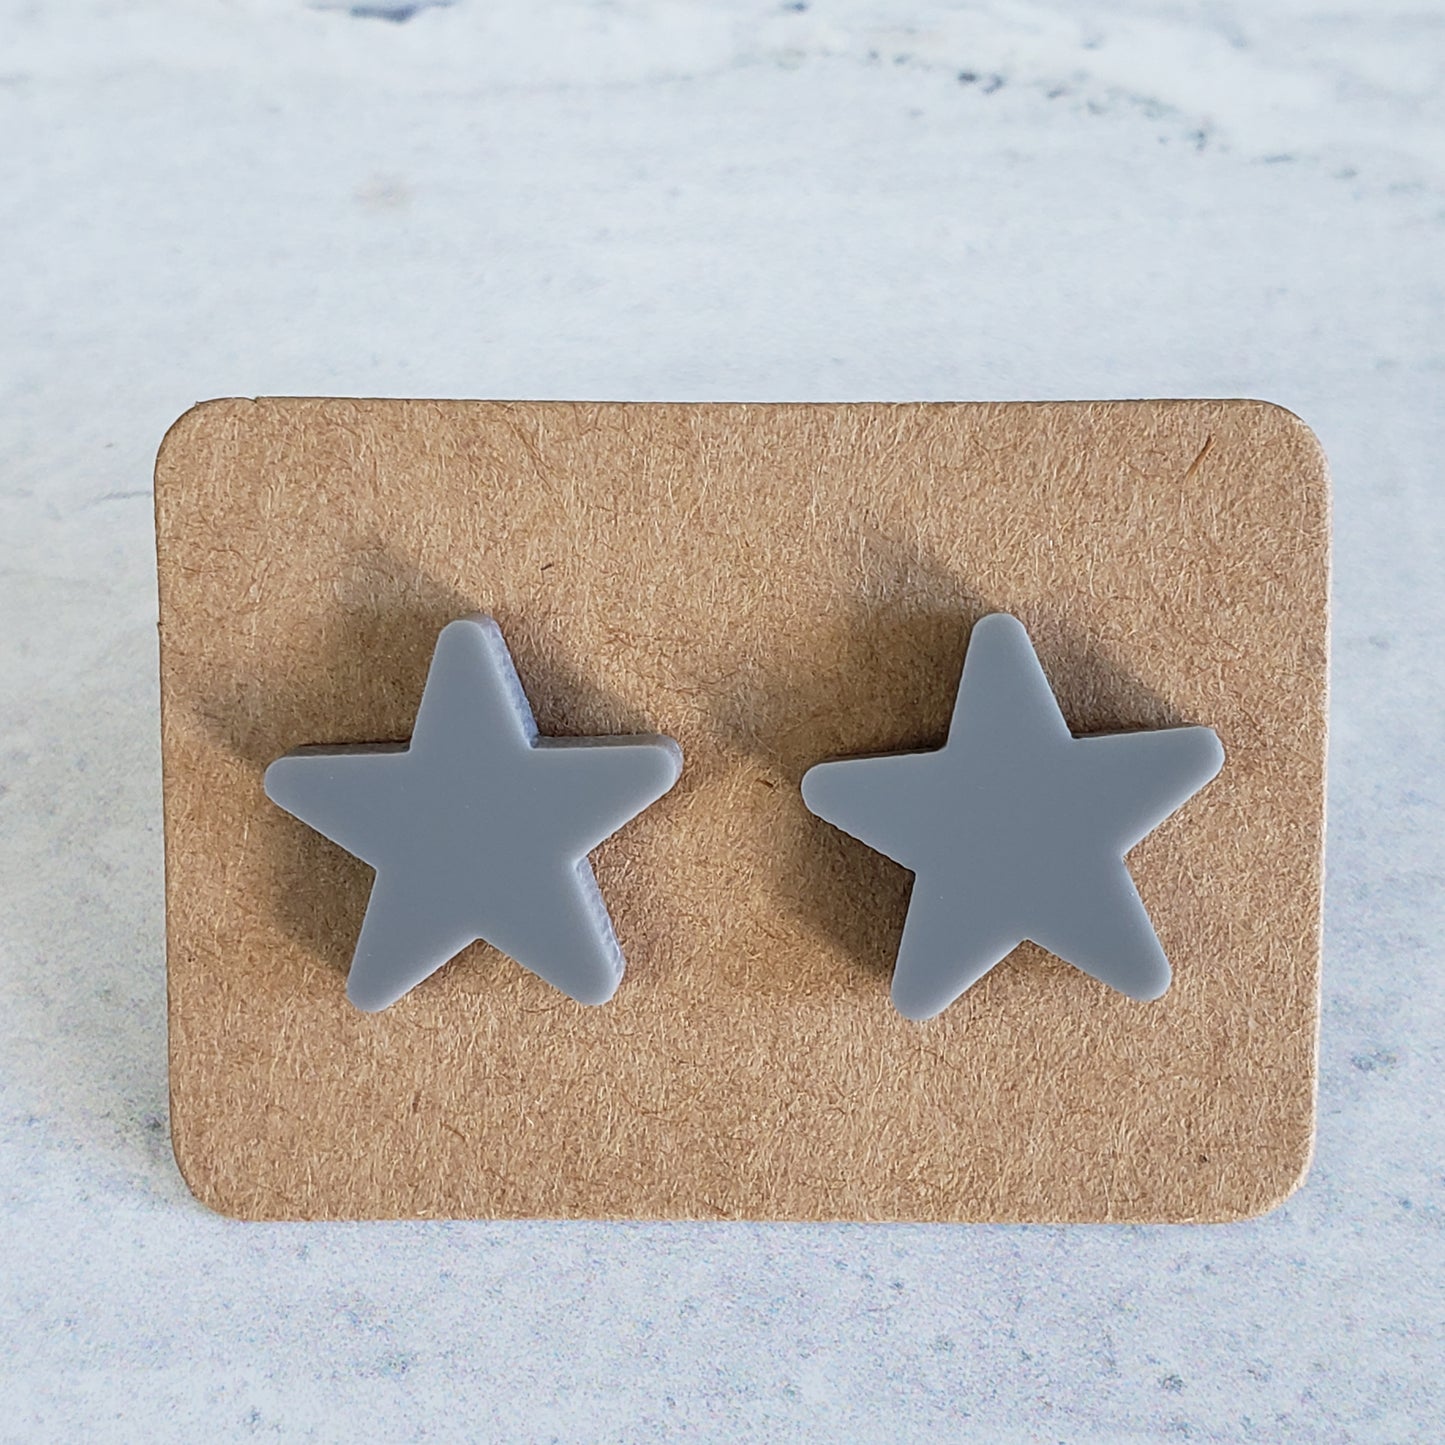 Gray star stud earrings on earring cards